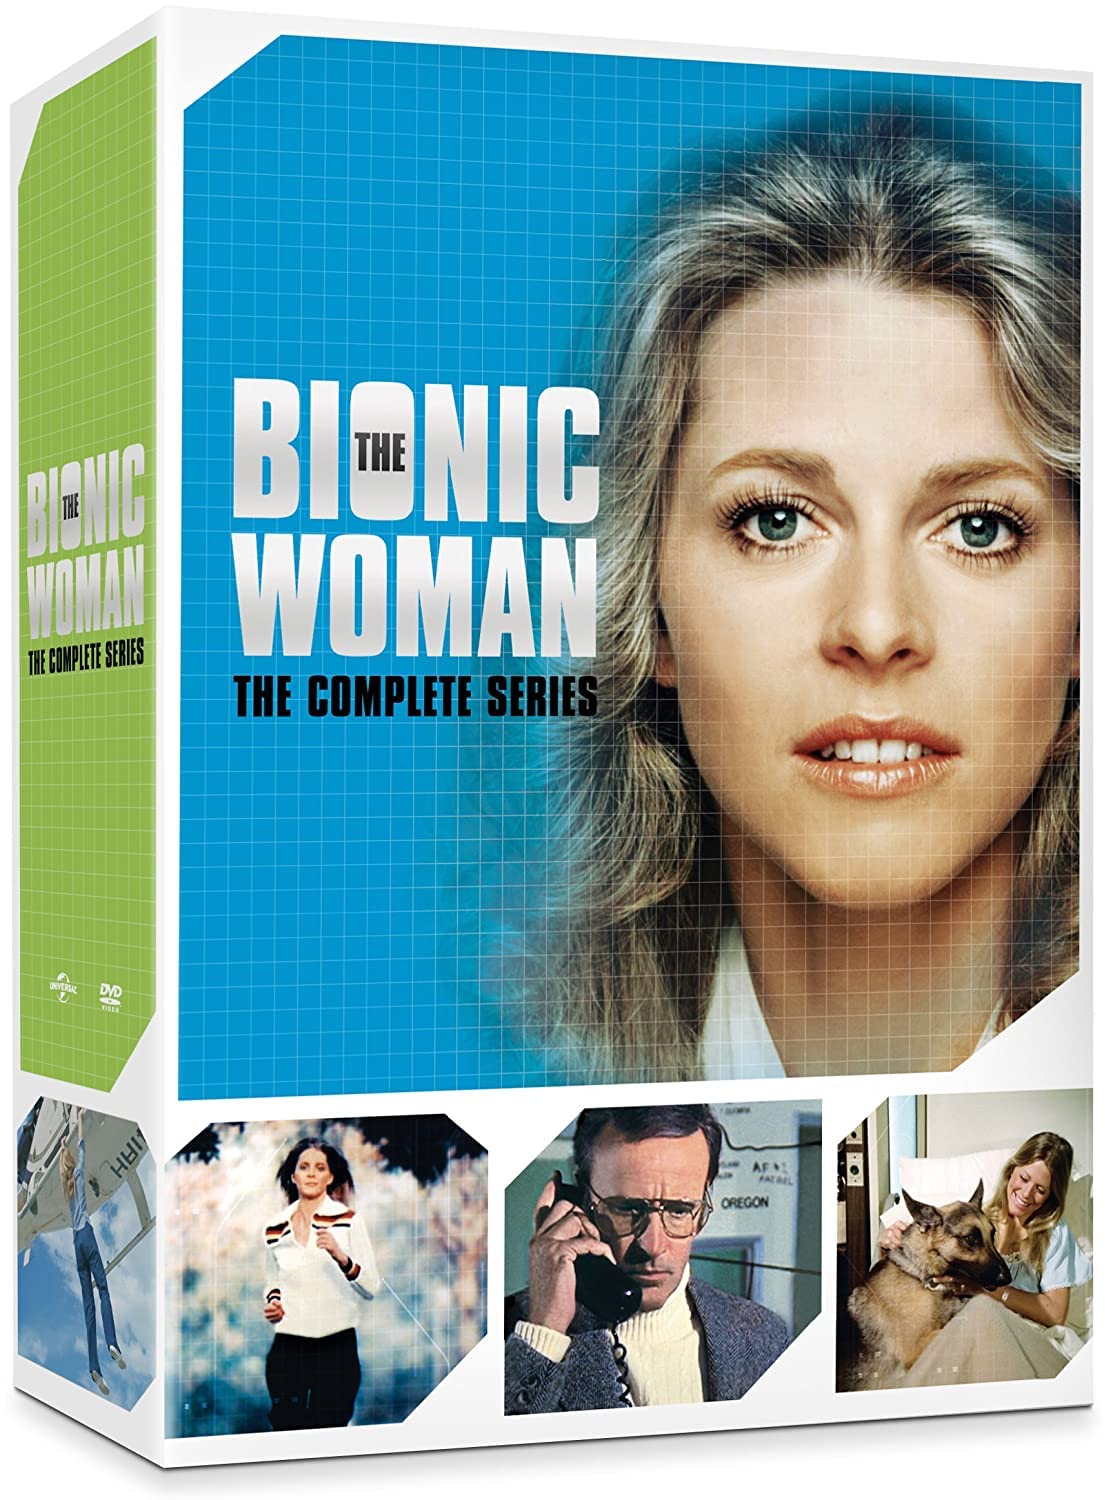 Bionic Woman on DVD